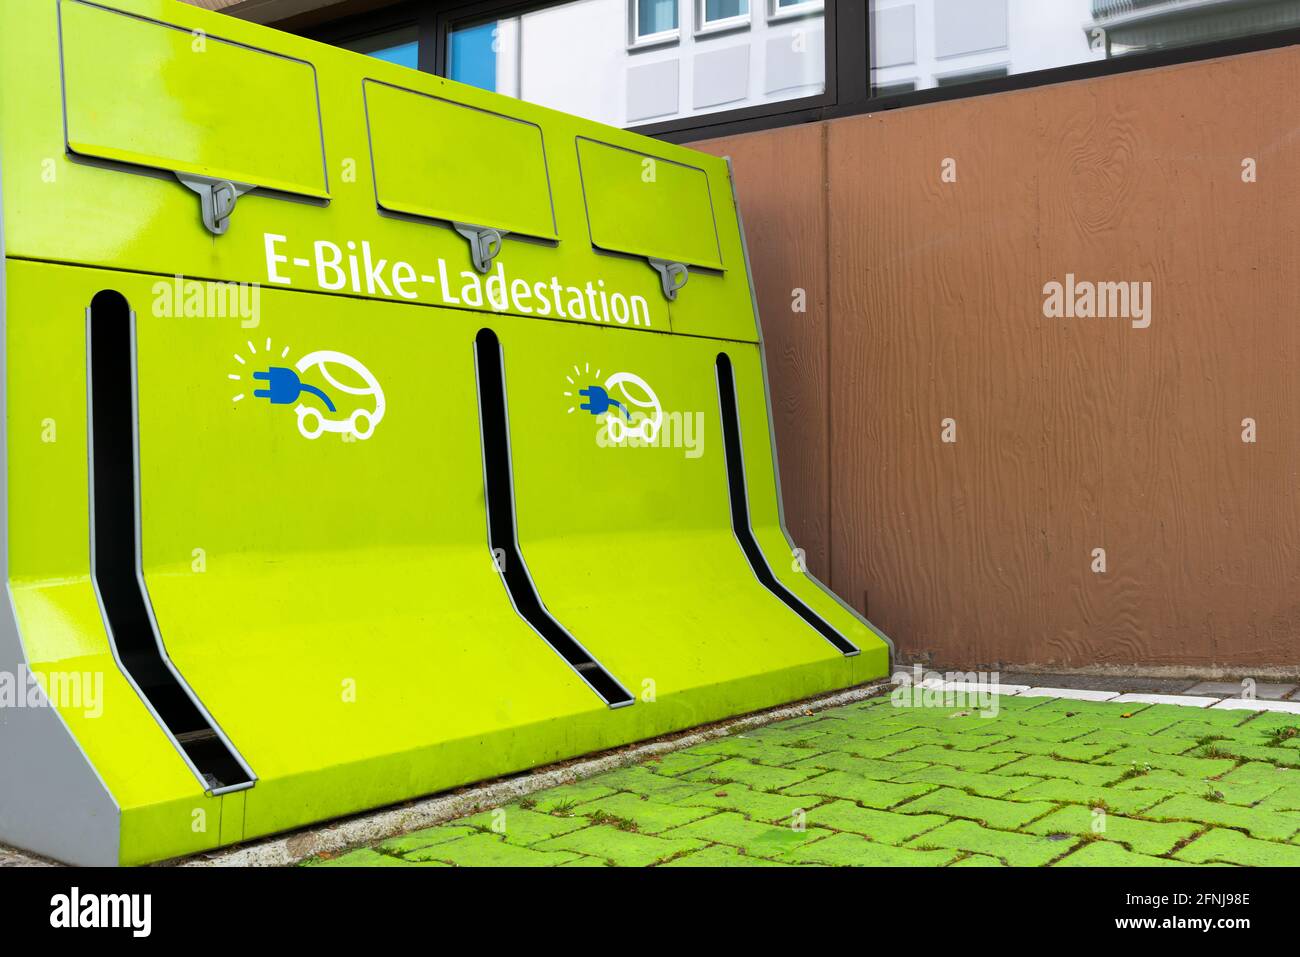 Station de charge e-Bike (Ladestation) Banque D'Images